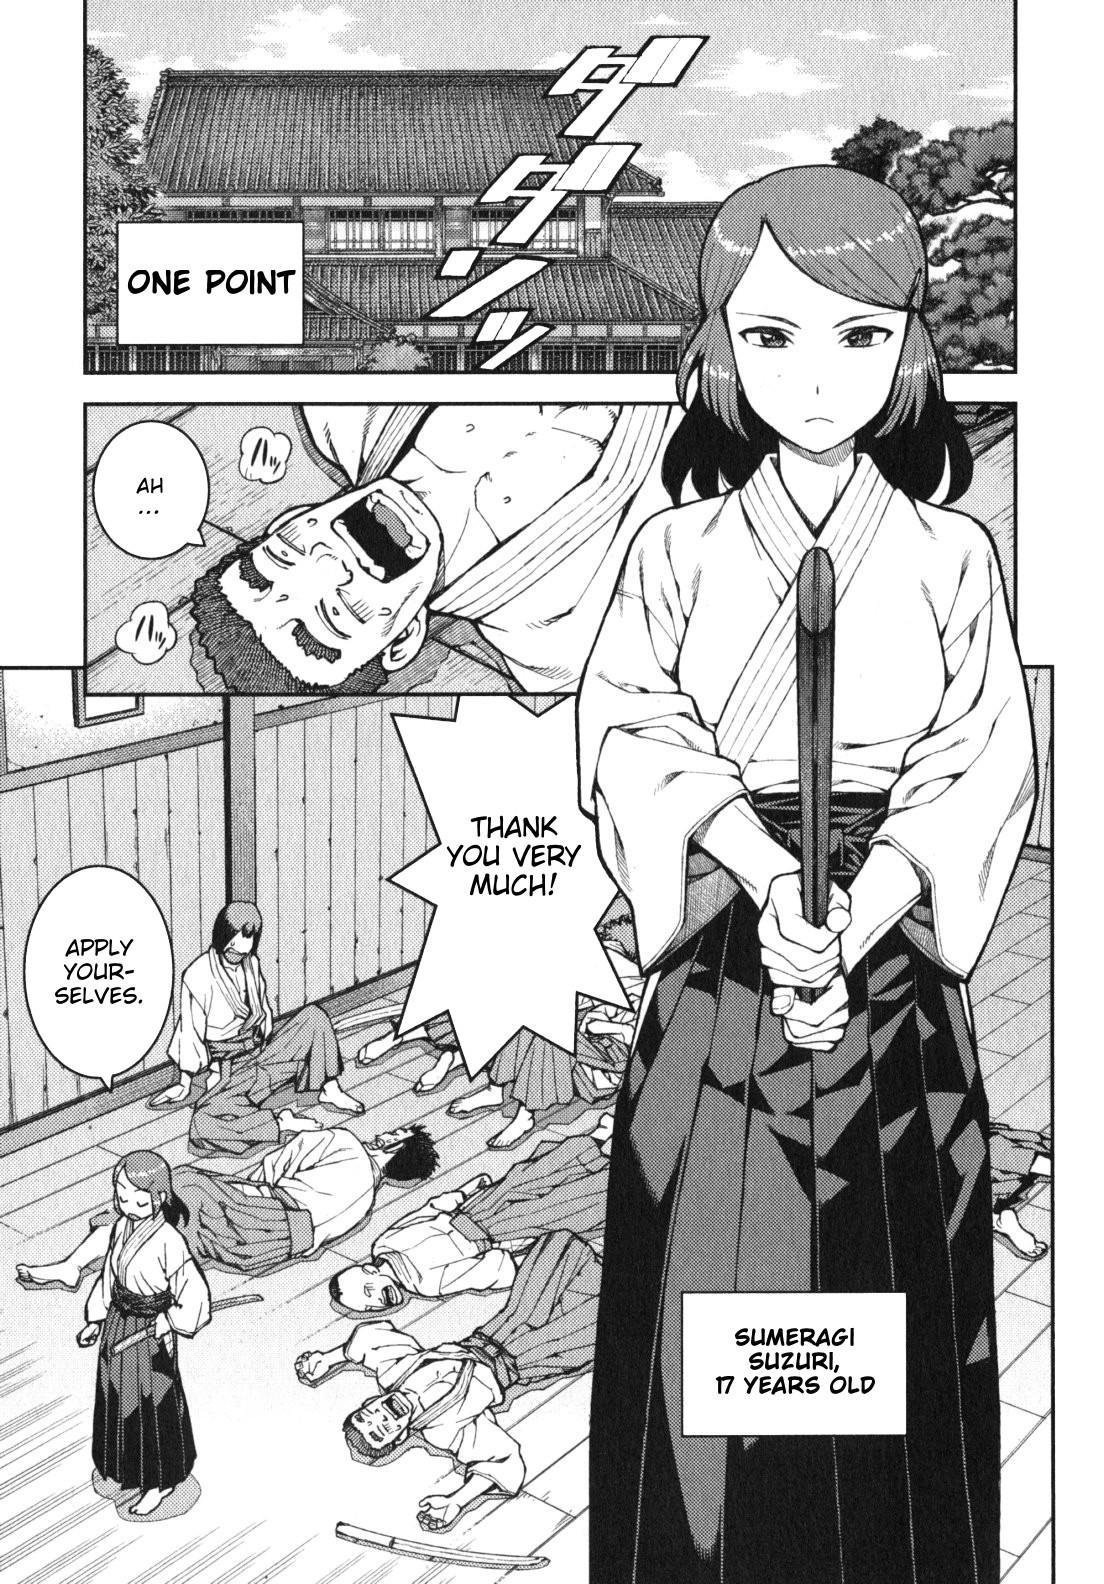 Read Tsugumomo Chapter 99 : Oriobana Ouhi on Mangakakalot